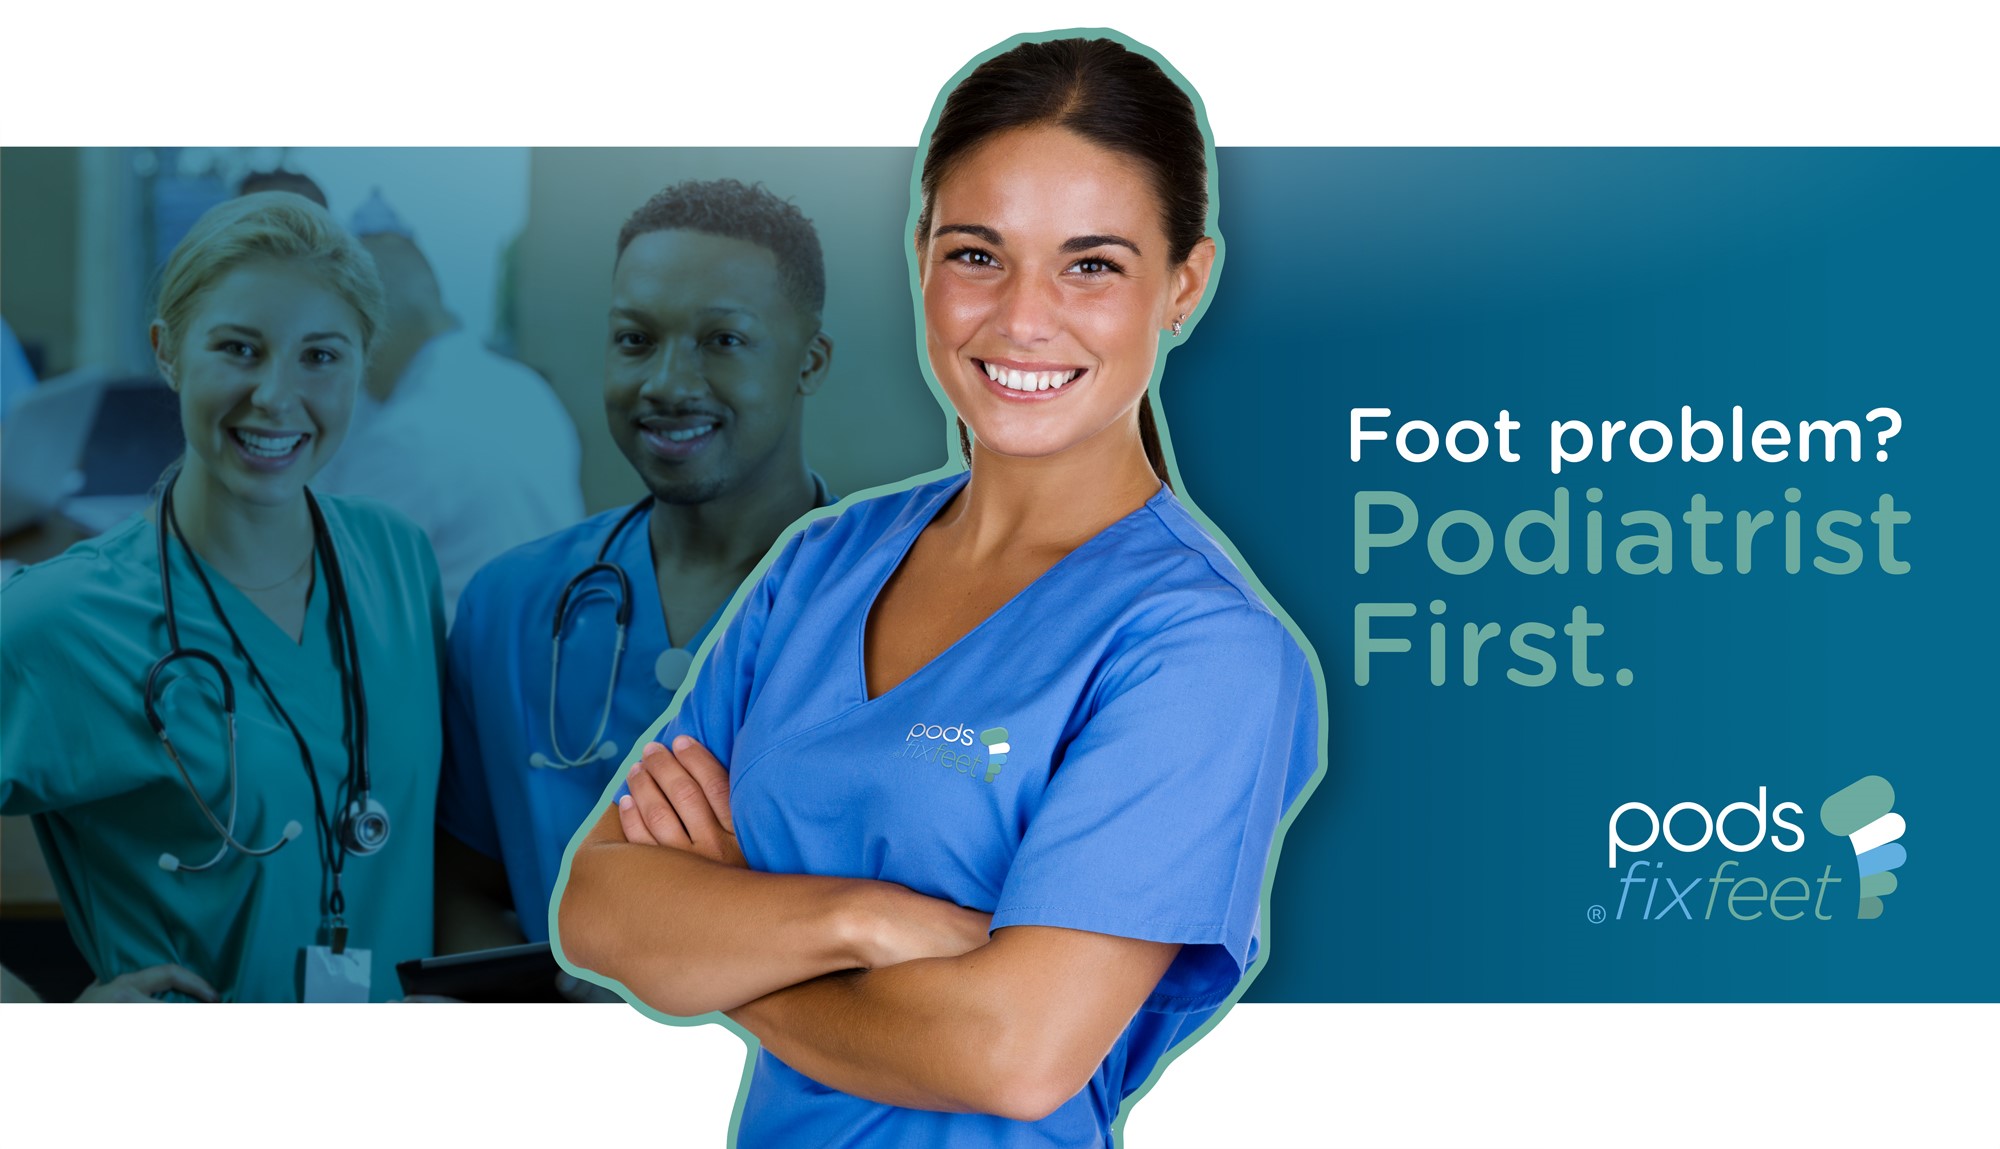 Podiatrist First Female 1 Pods Fix Feet 